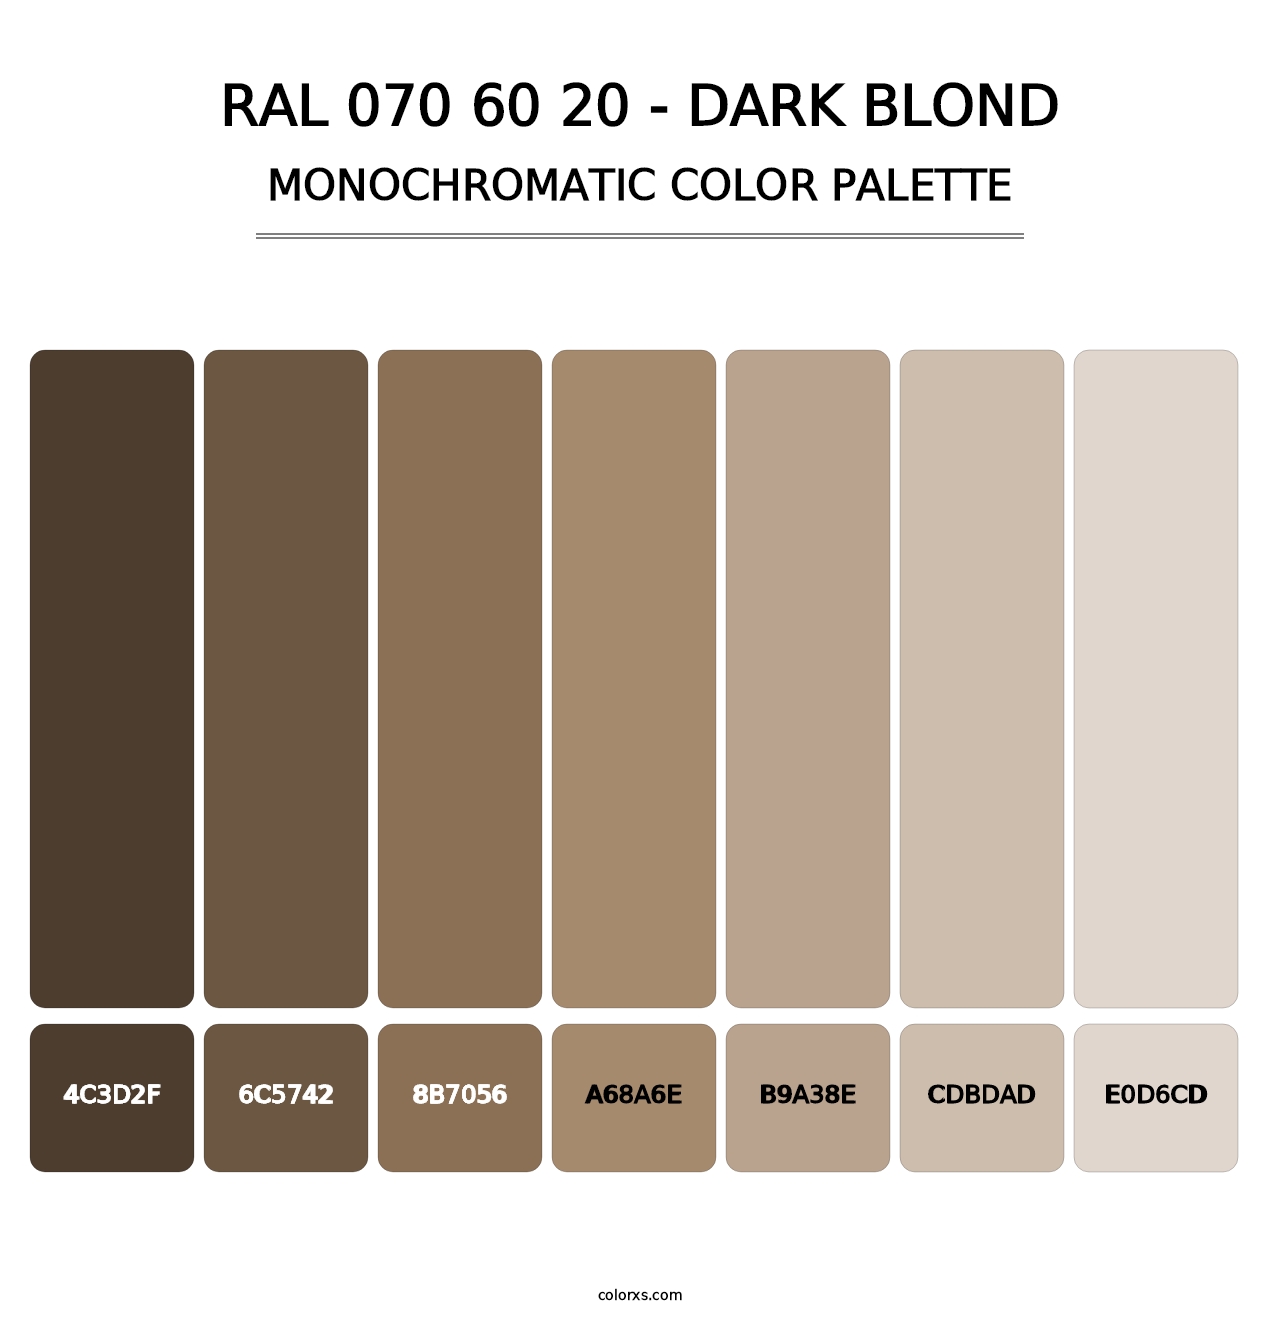 RAL 070 60 20 - Dark Blond - Monochromatic Color Palette